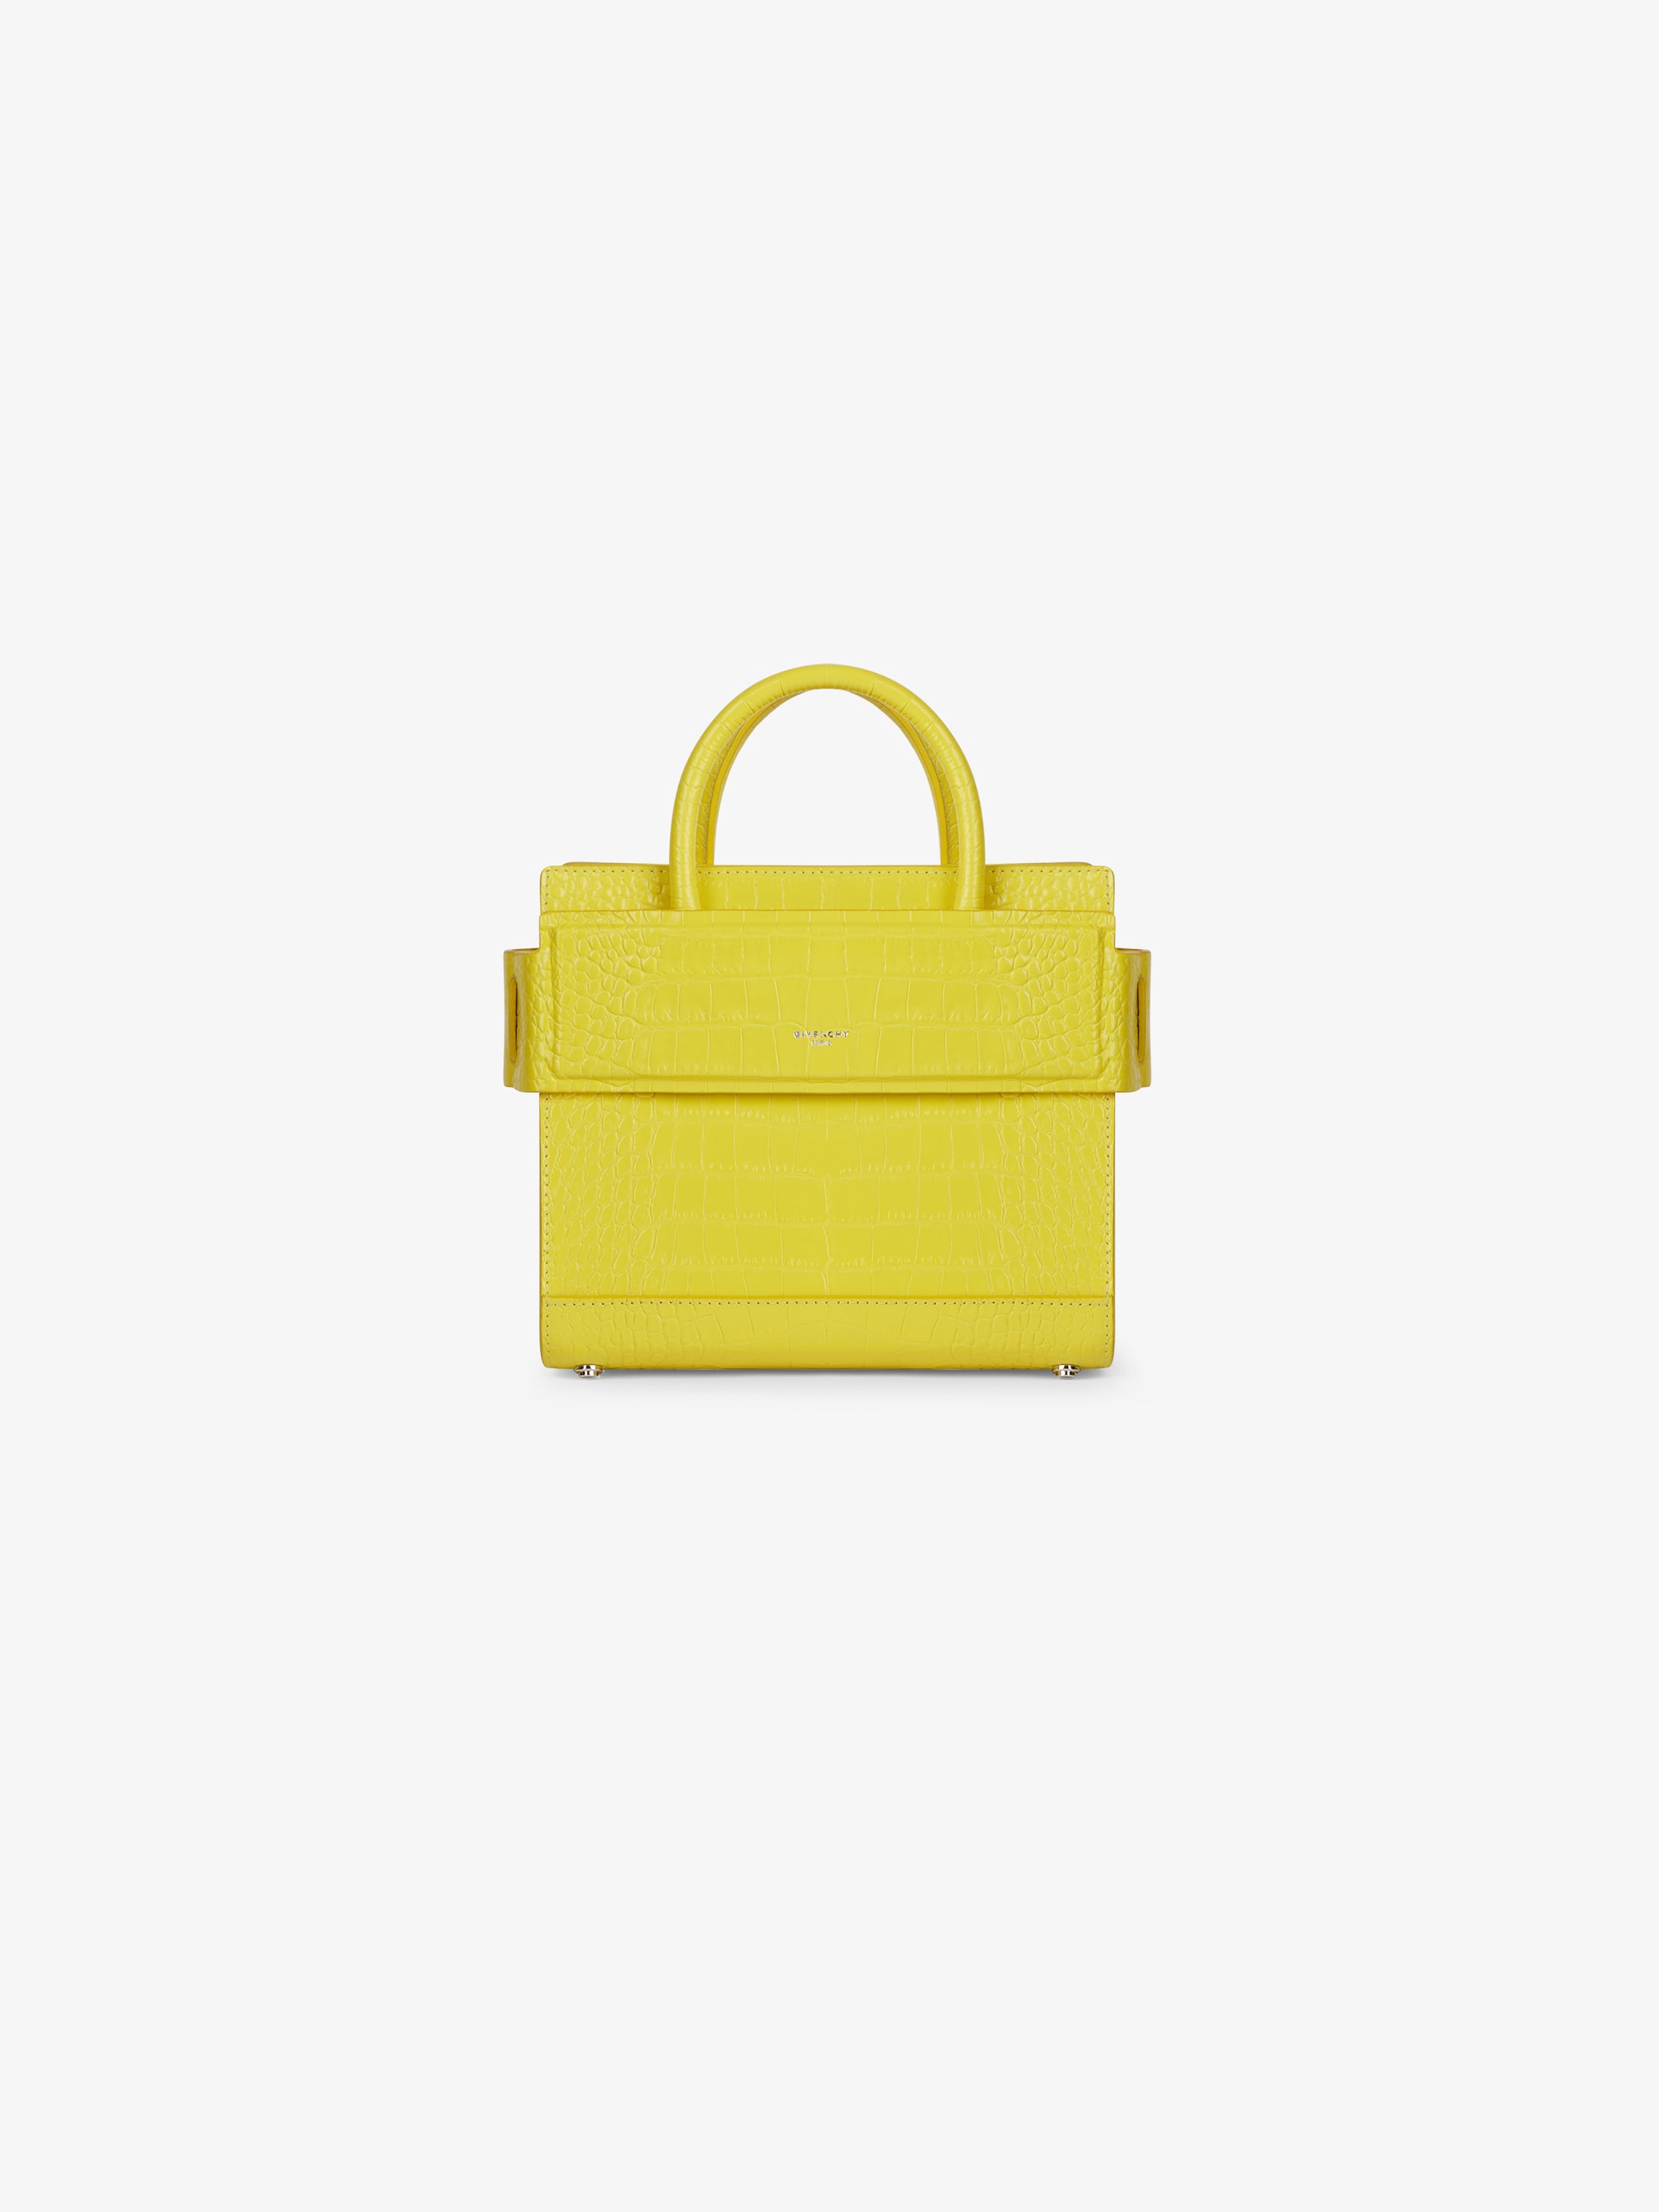 yellow givenchy bag